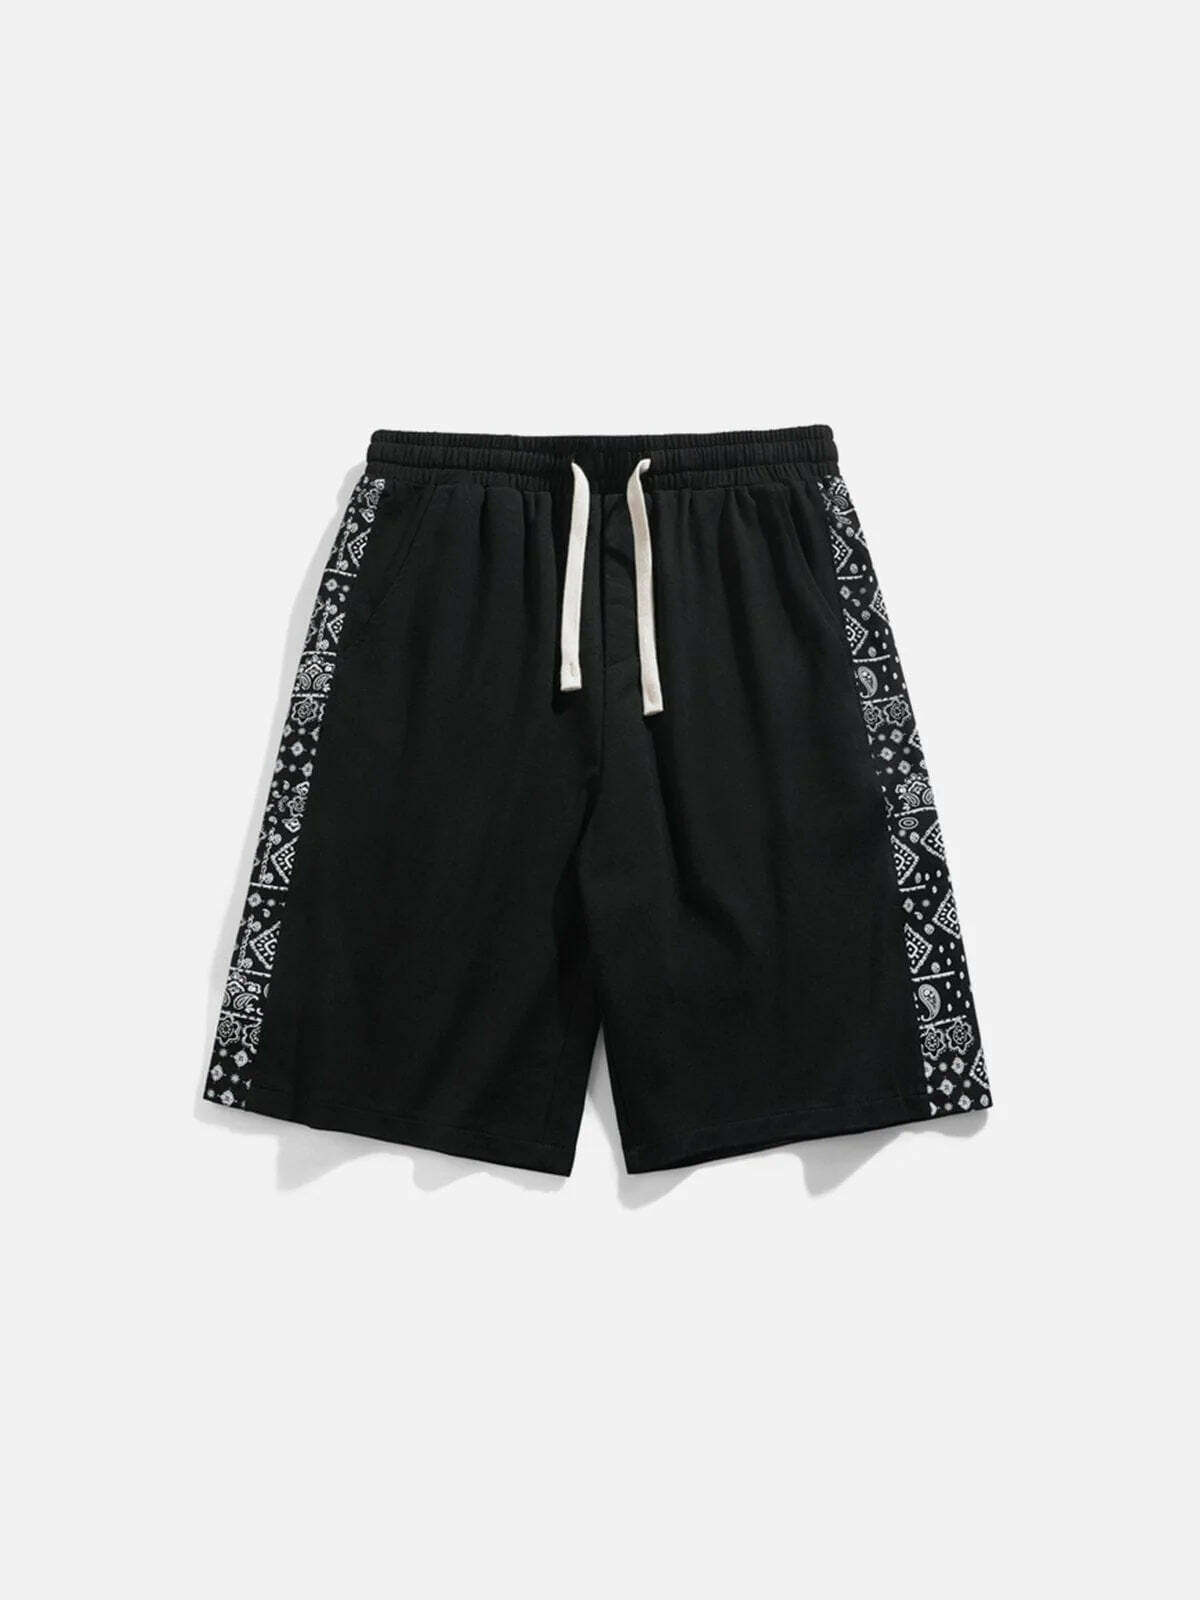 bandana print drawstring shorts edgy streetwear essential 1677